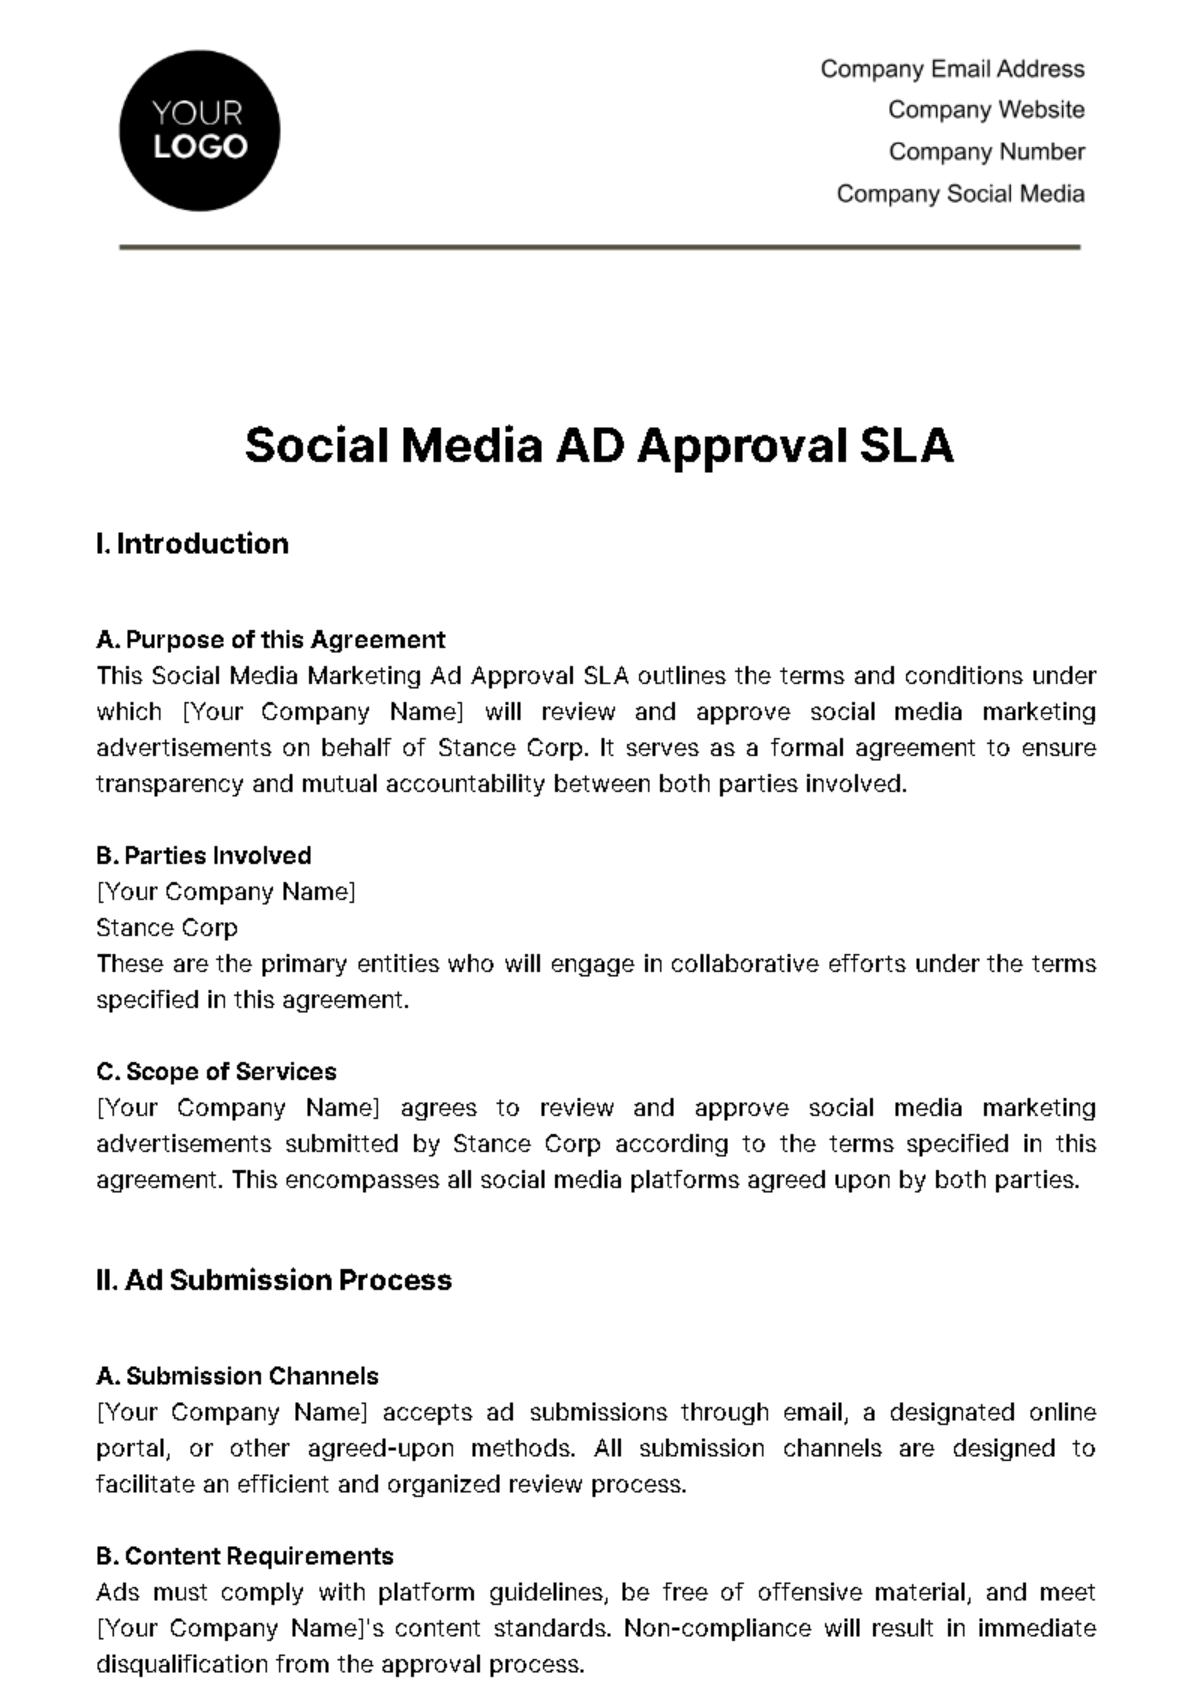 Free Social Media Marketing Ad Approval SLA Template